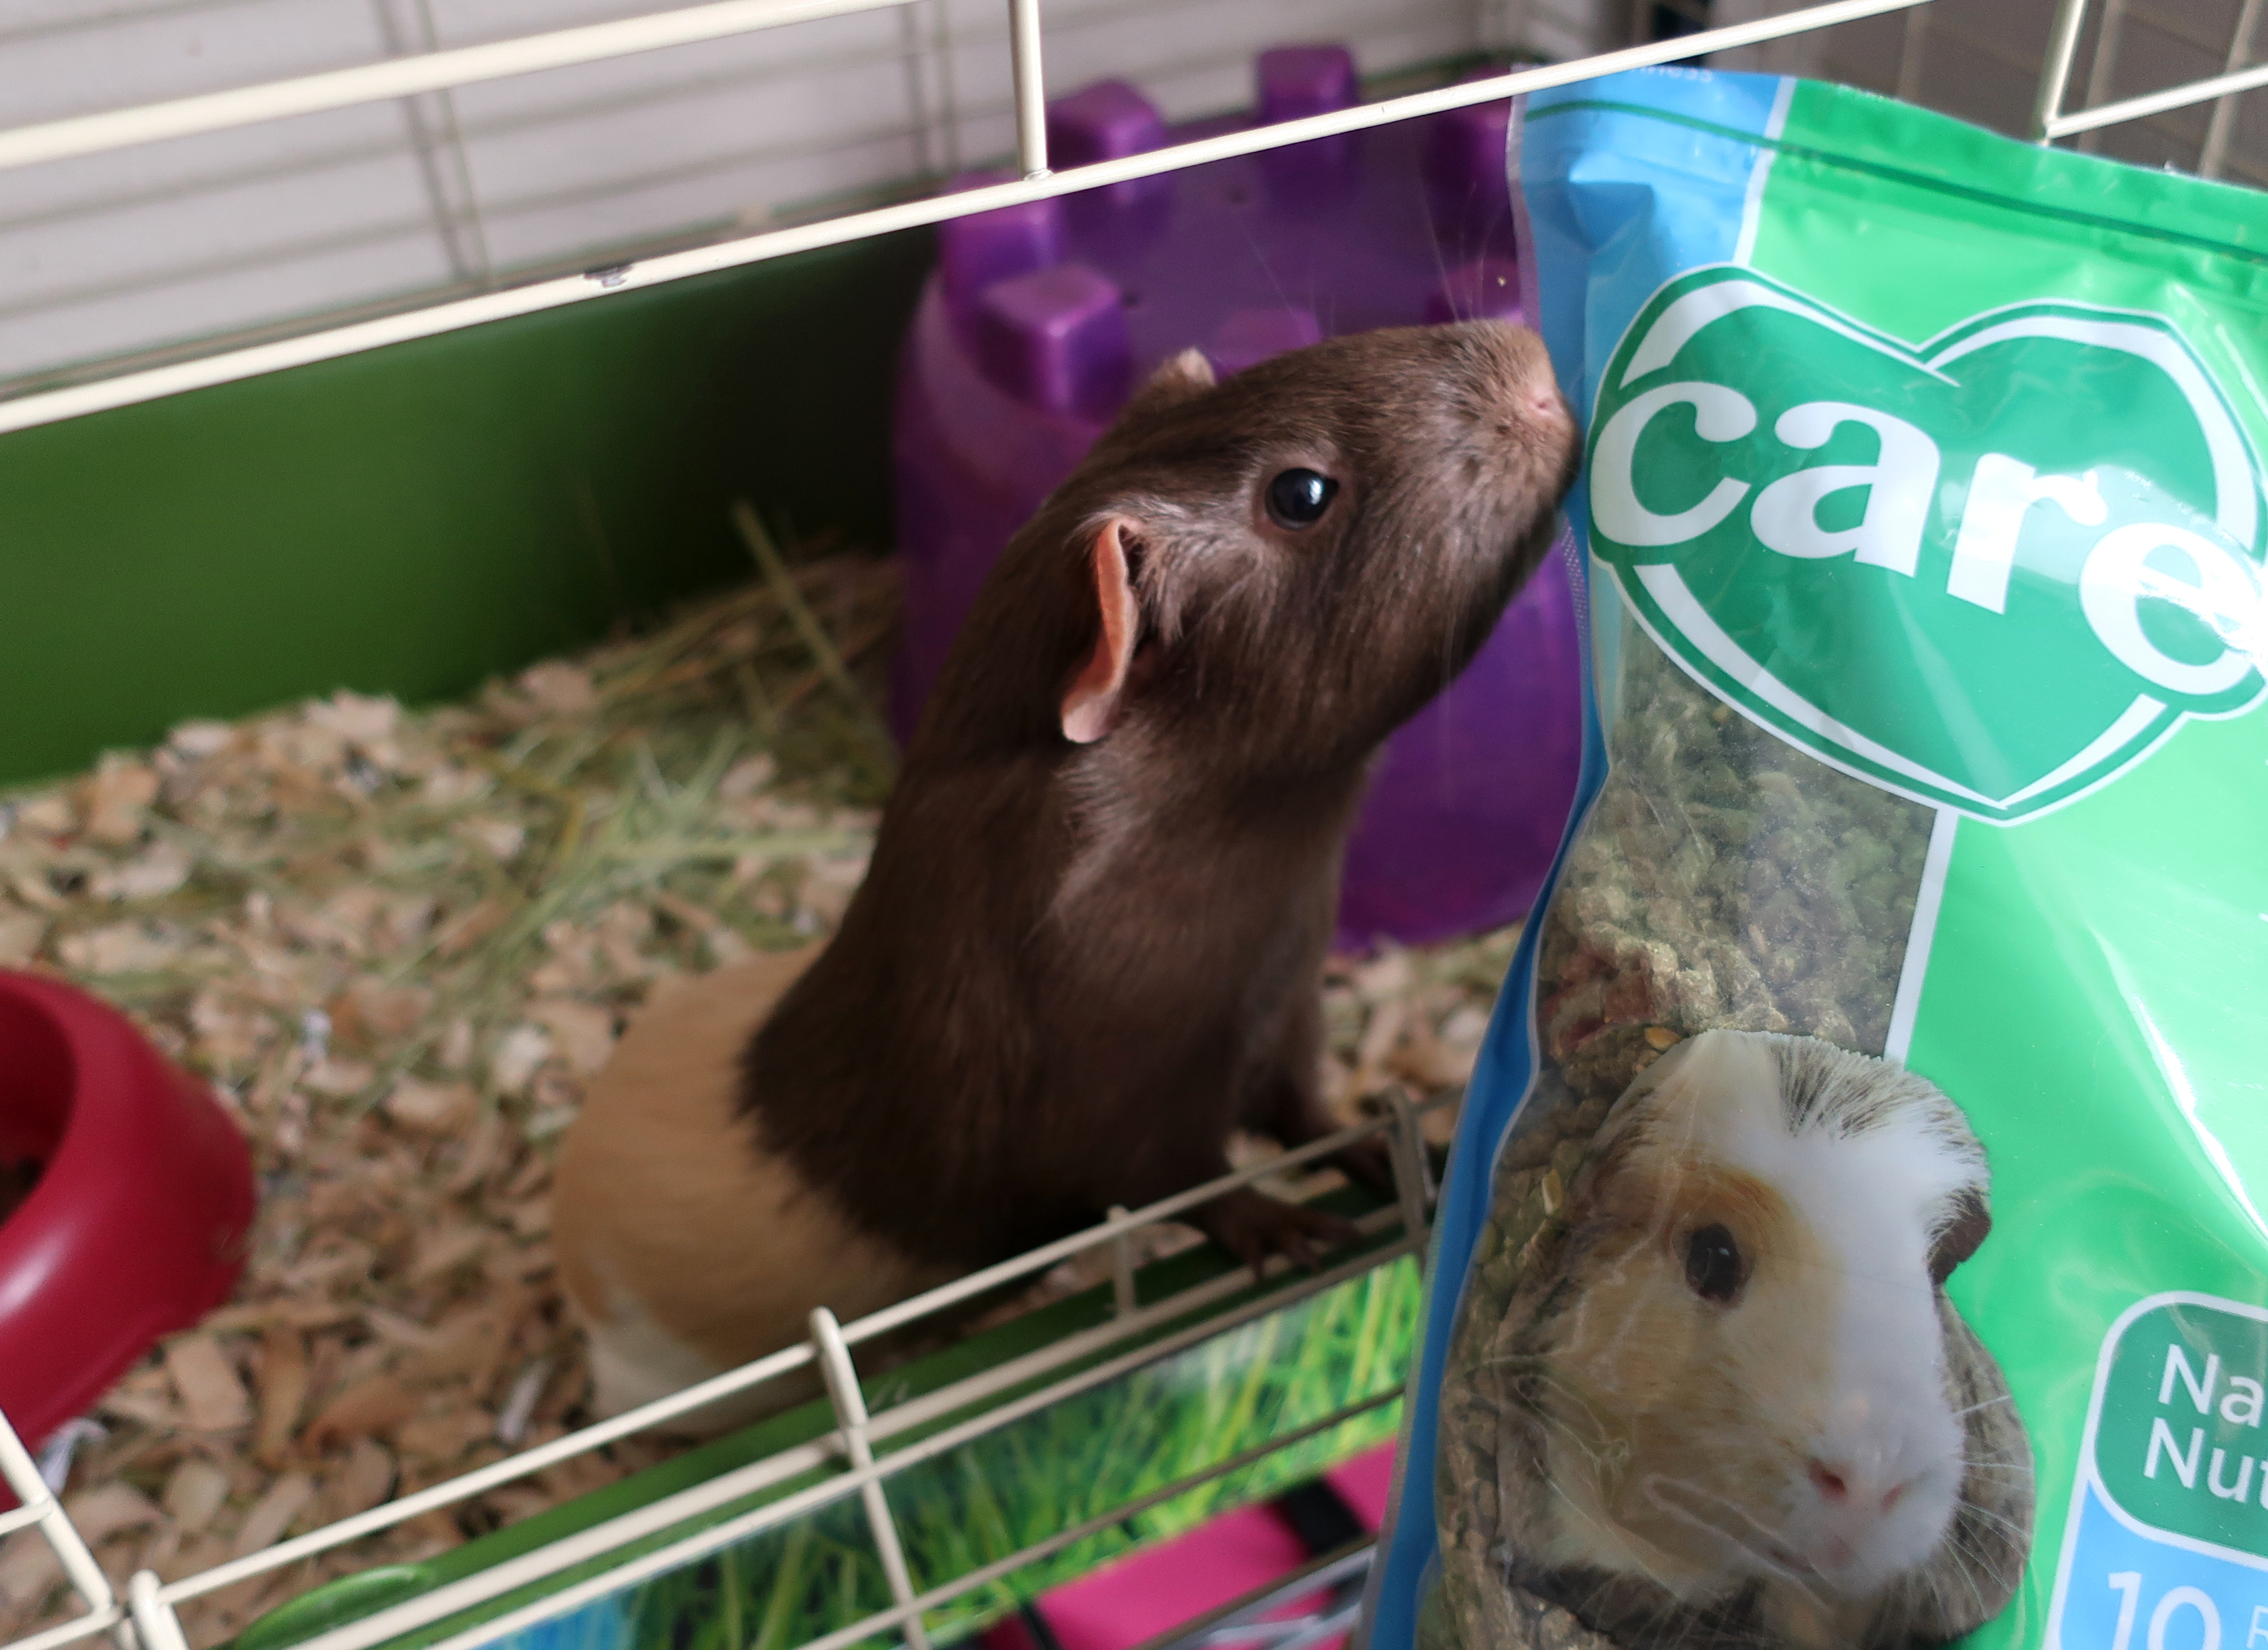 carefresh for guinea pigs